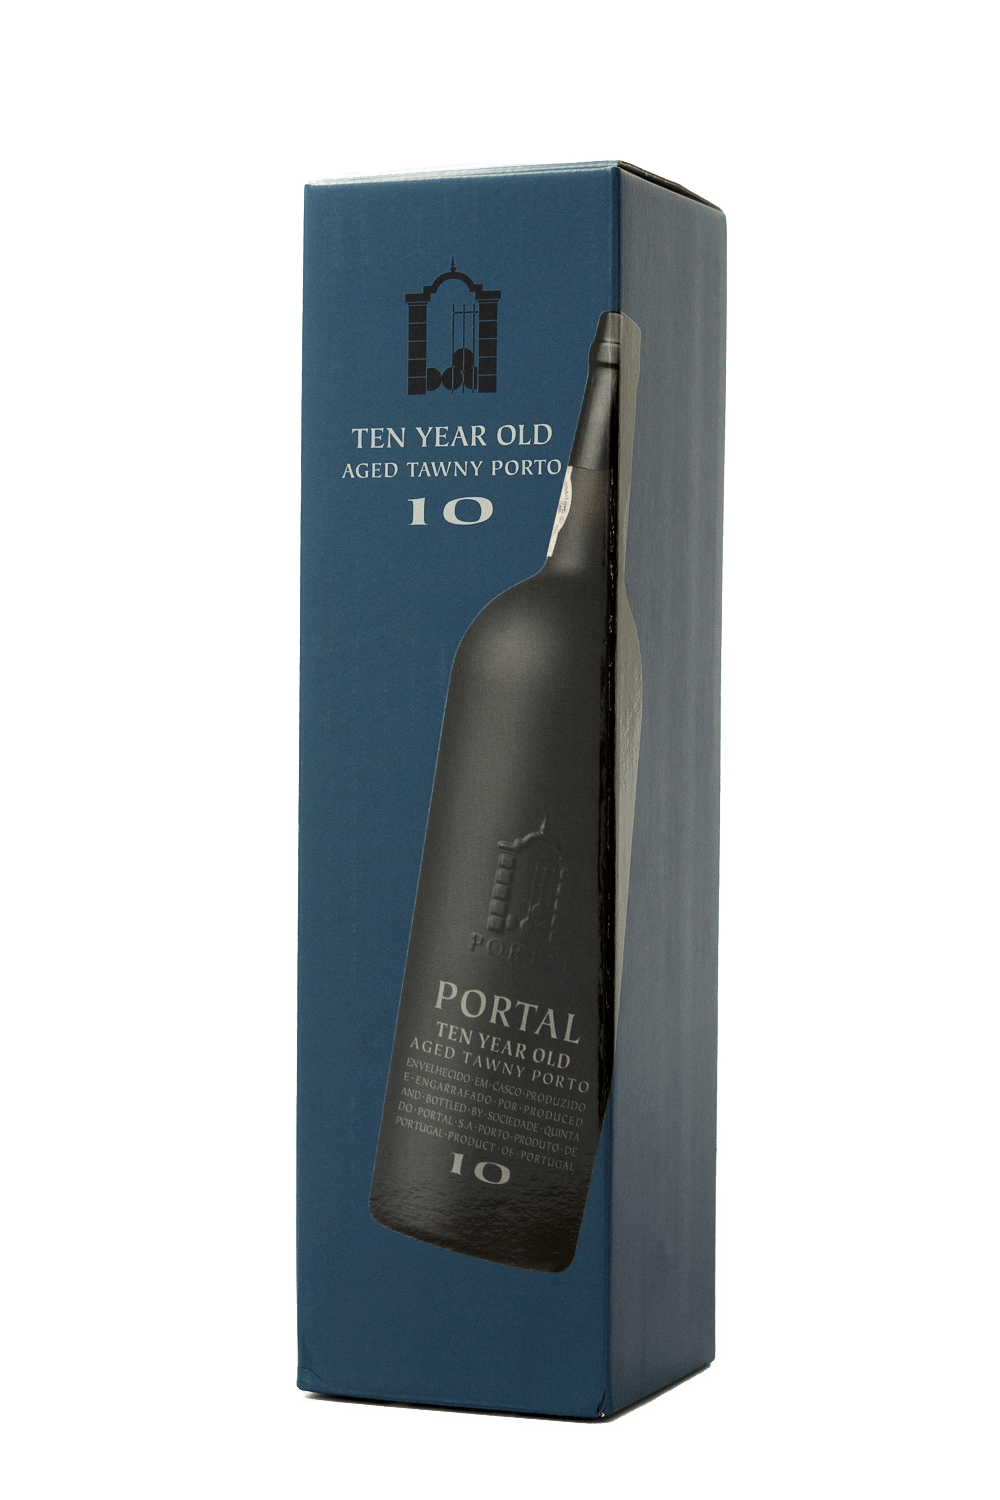 Quinta do Portal - Vinho do Porto - 10 Years Old Tawny - The Blend Wines